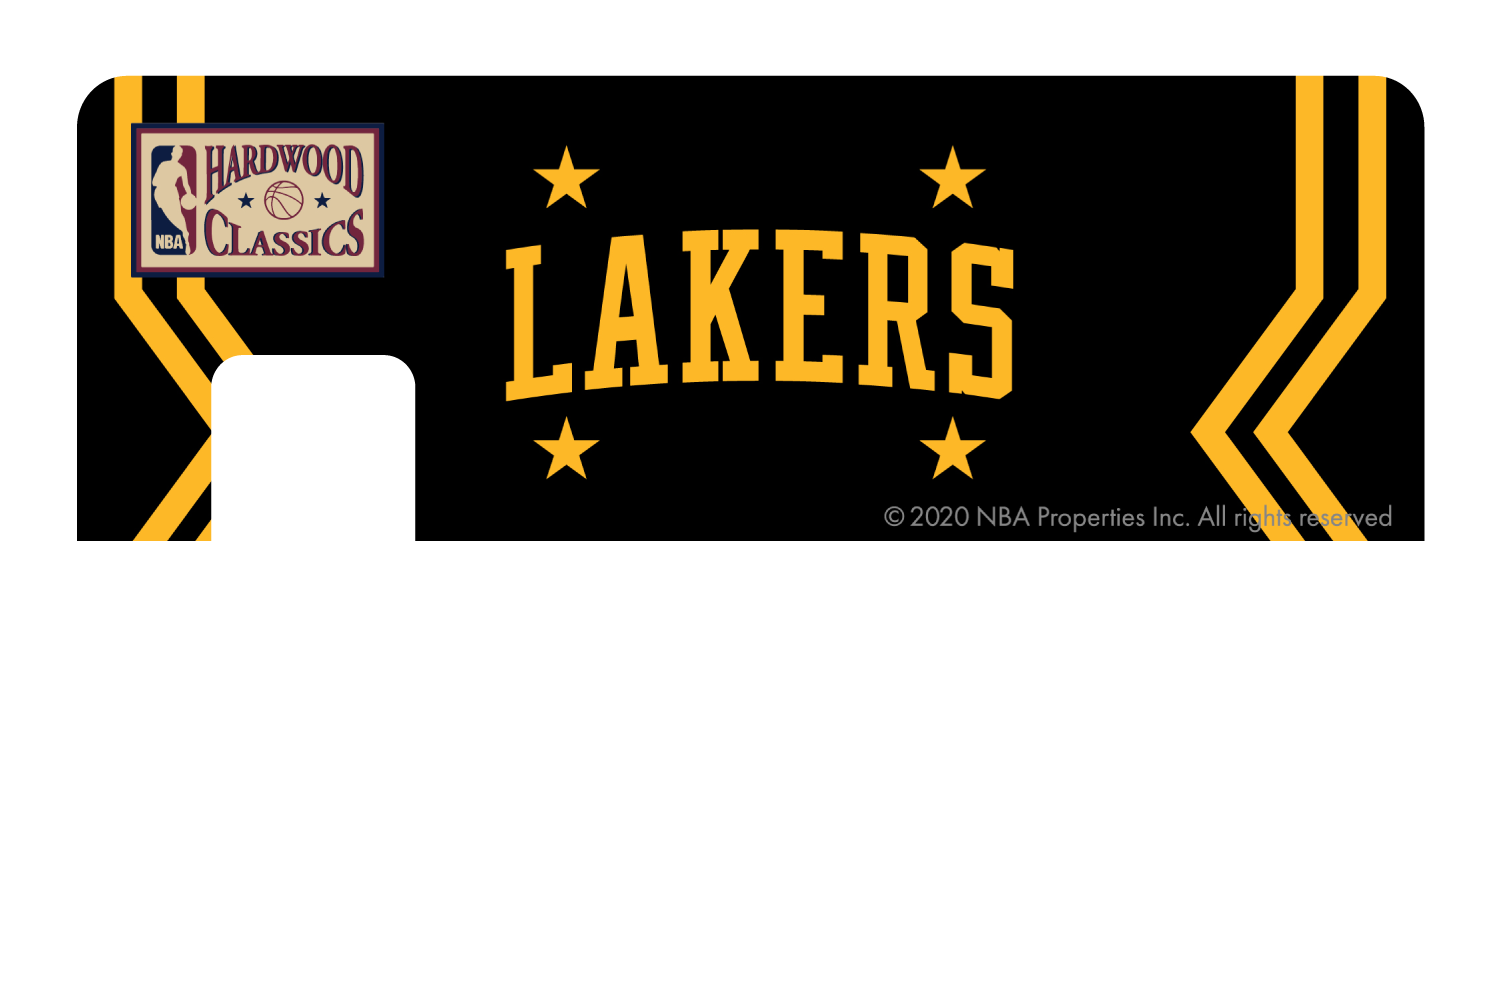 Los Angeles Lakers: Away Warmups Hardwood Classics